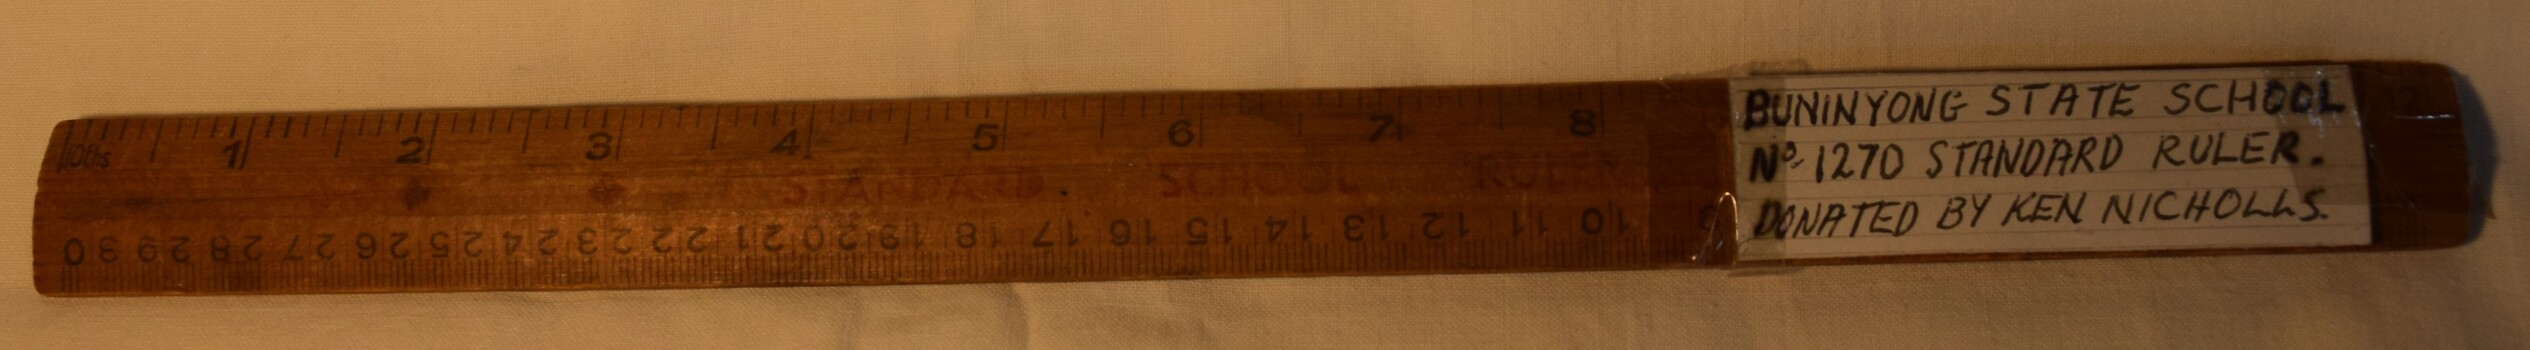 Ruler used at Buninyong state school by Ken Nicholls.